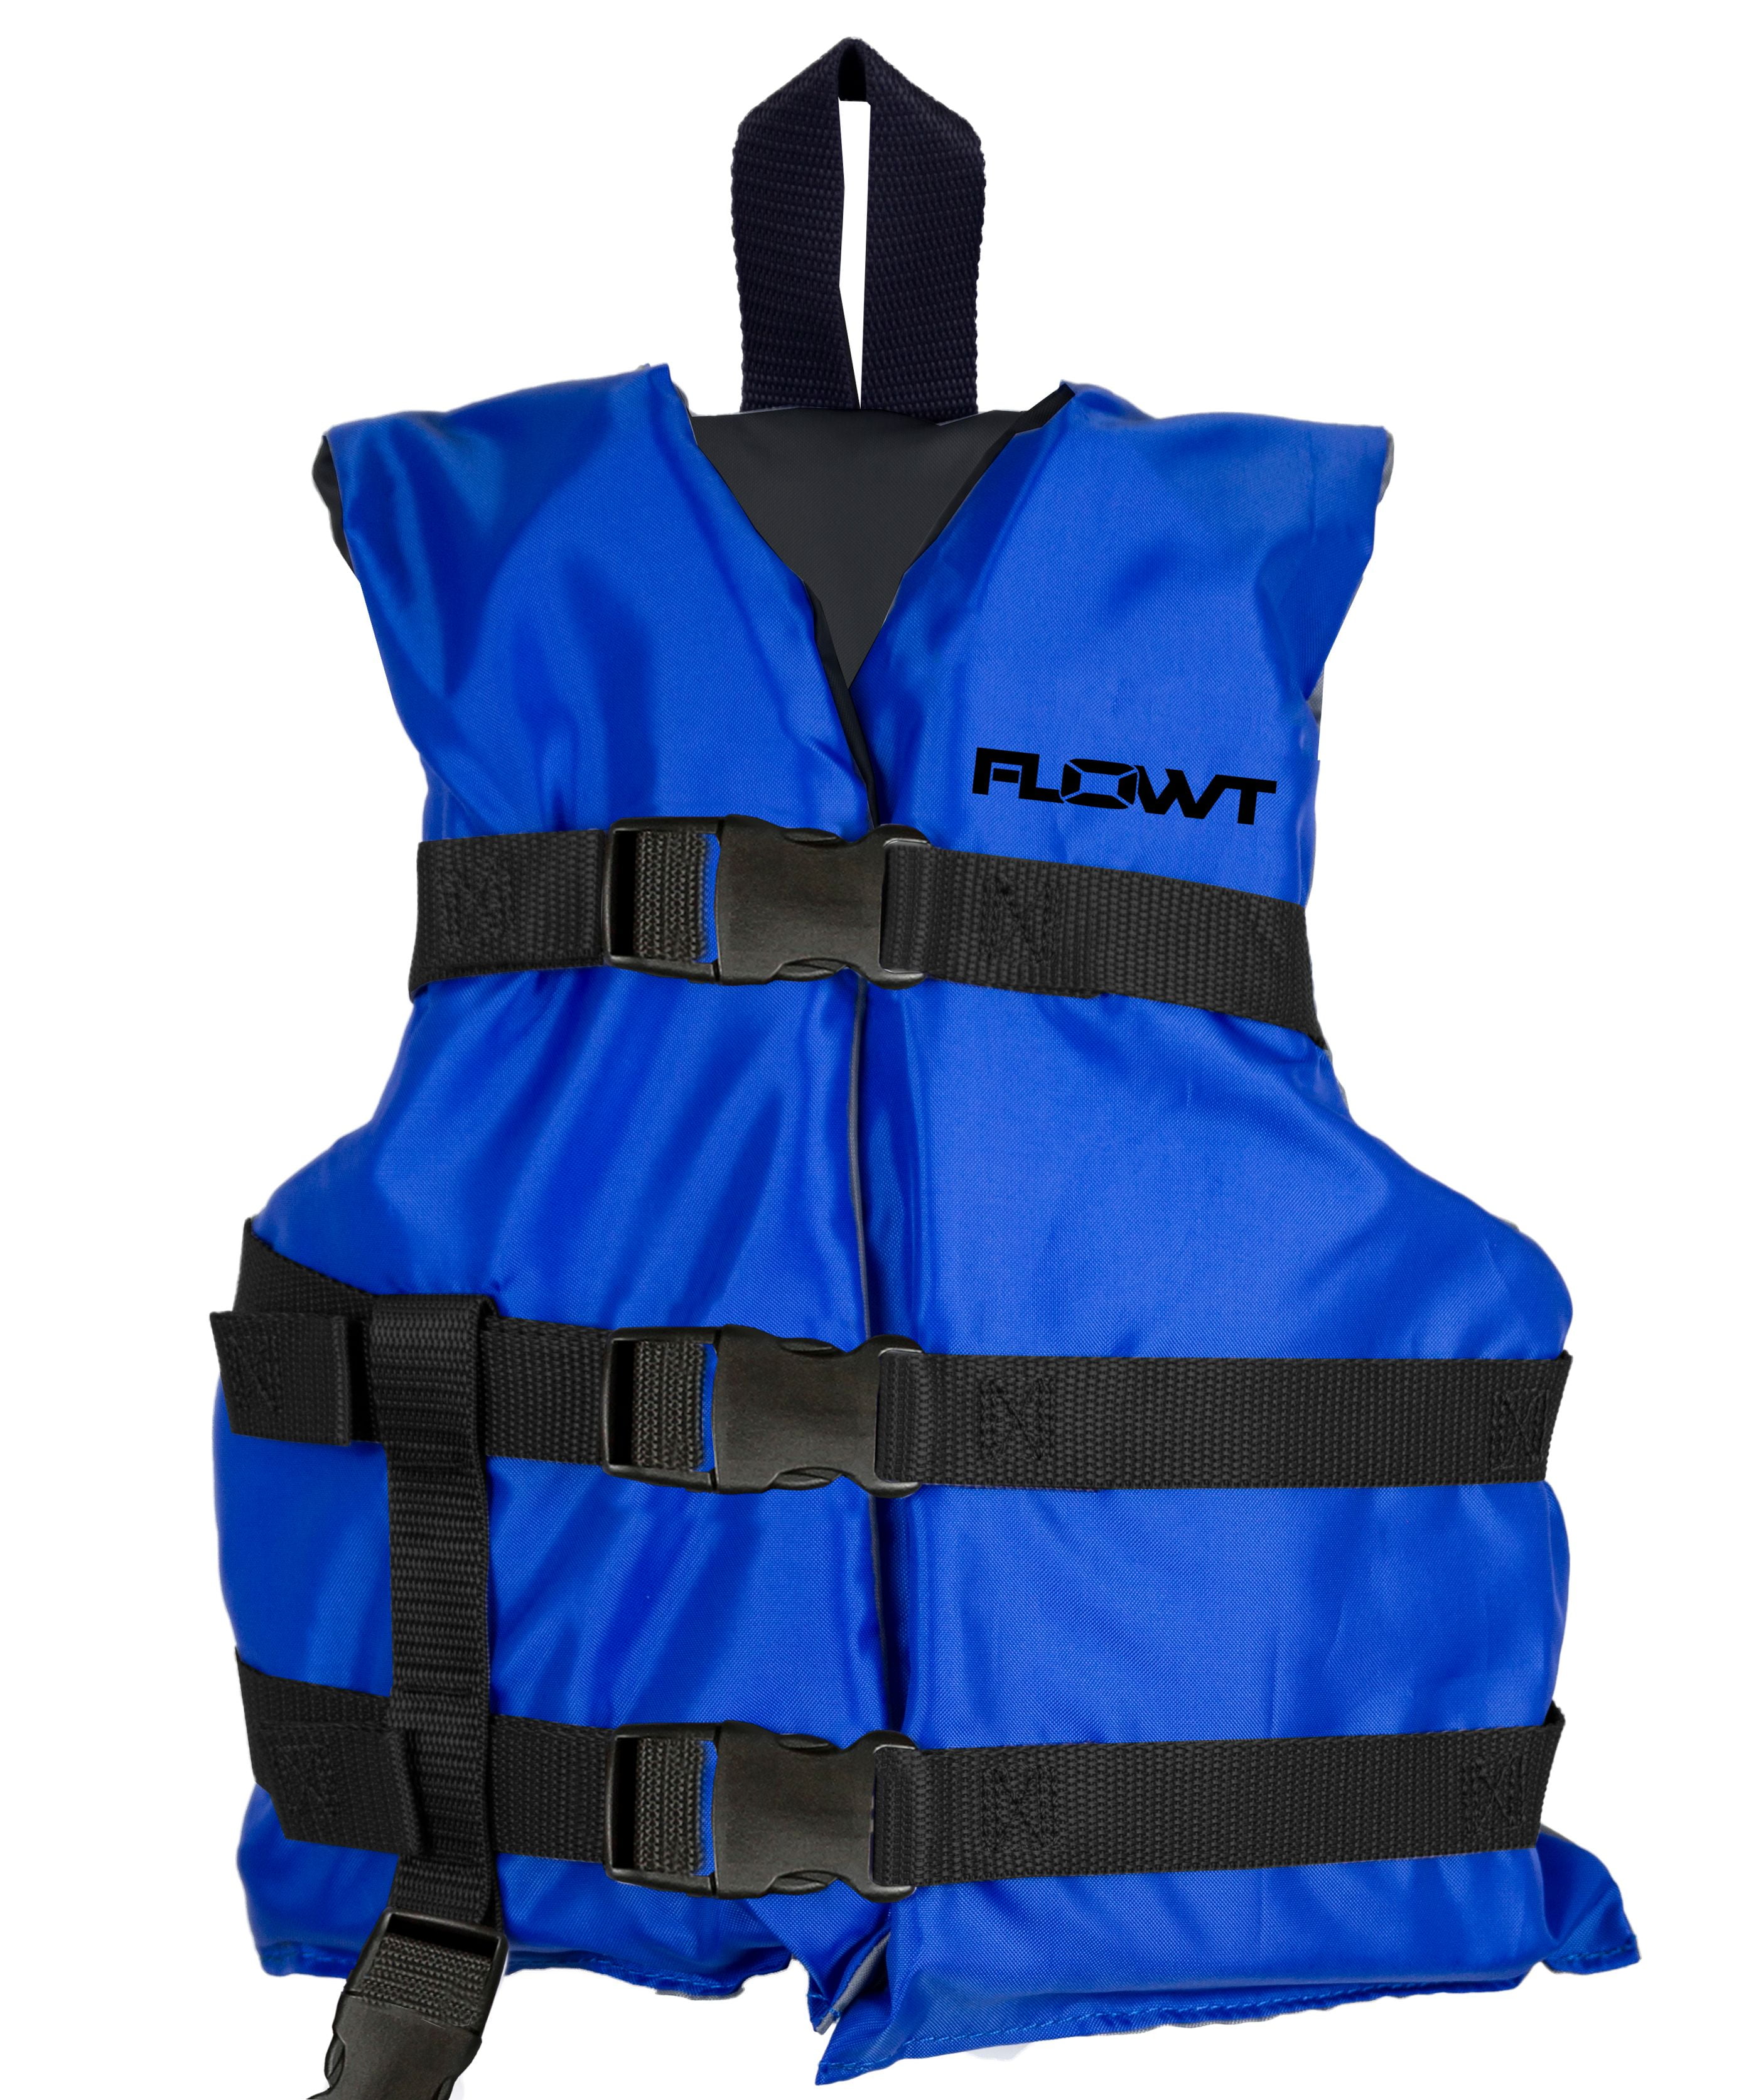 FLOWT Multi Purpose Life Vest - USCG Approved Type III PFD - Walmart.com